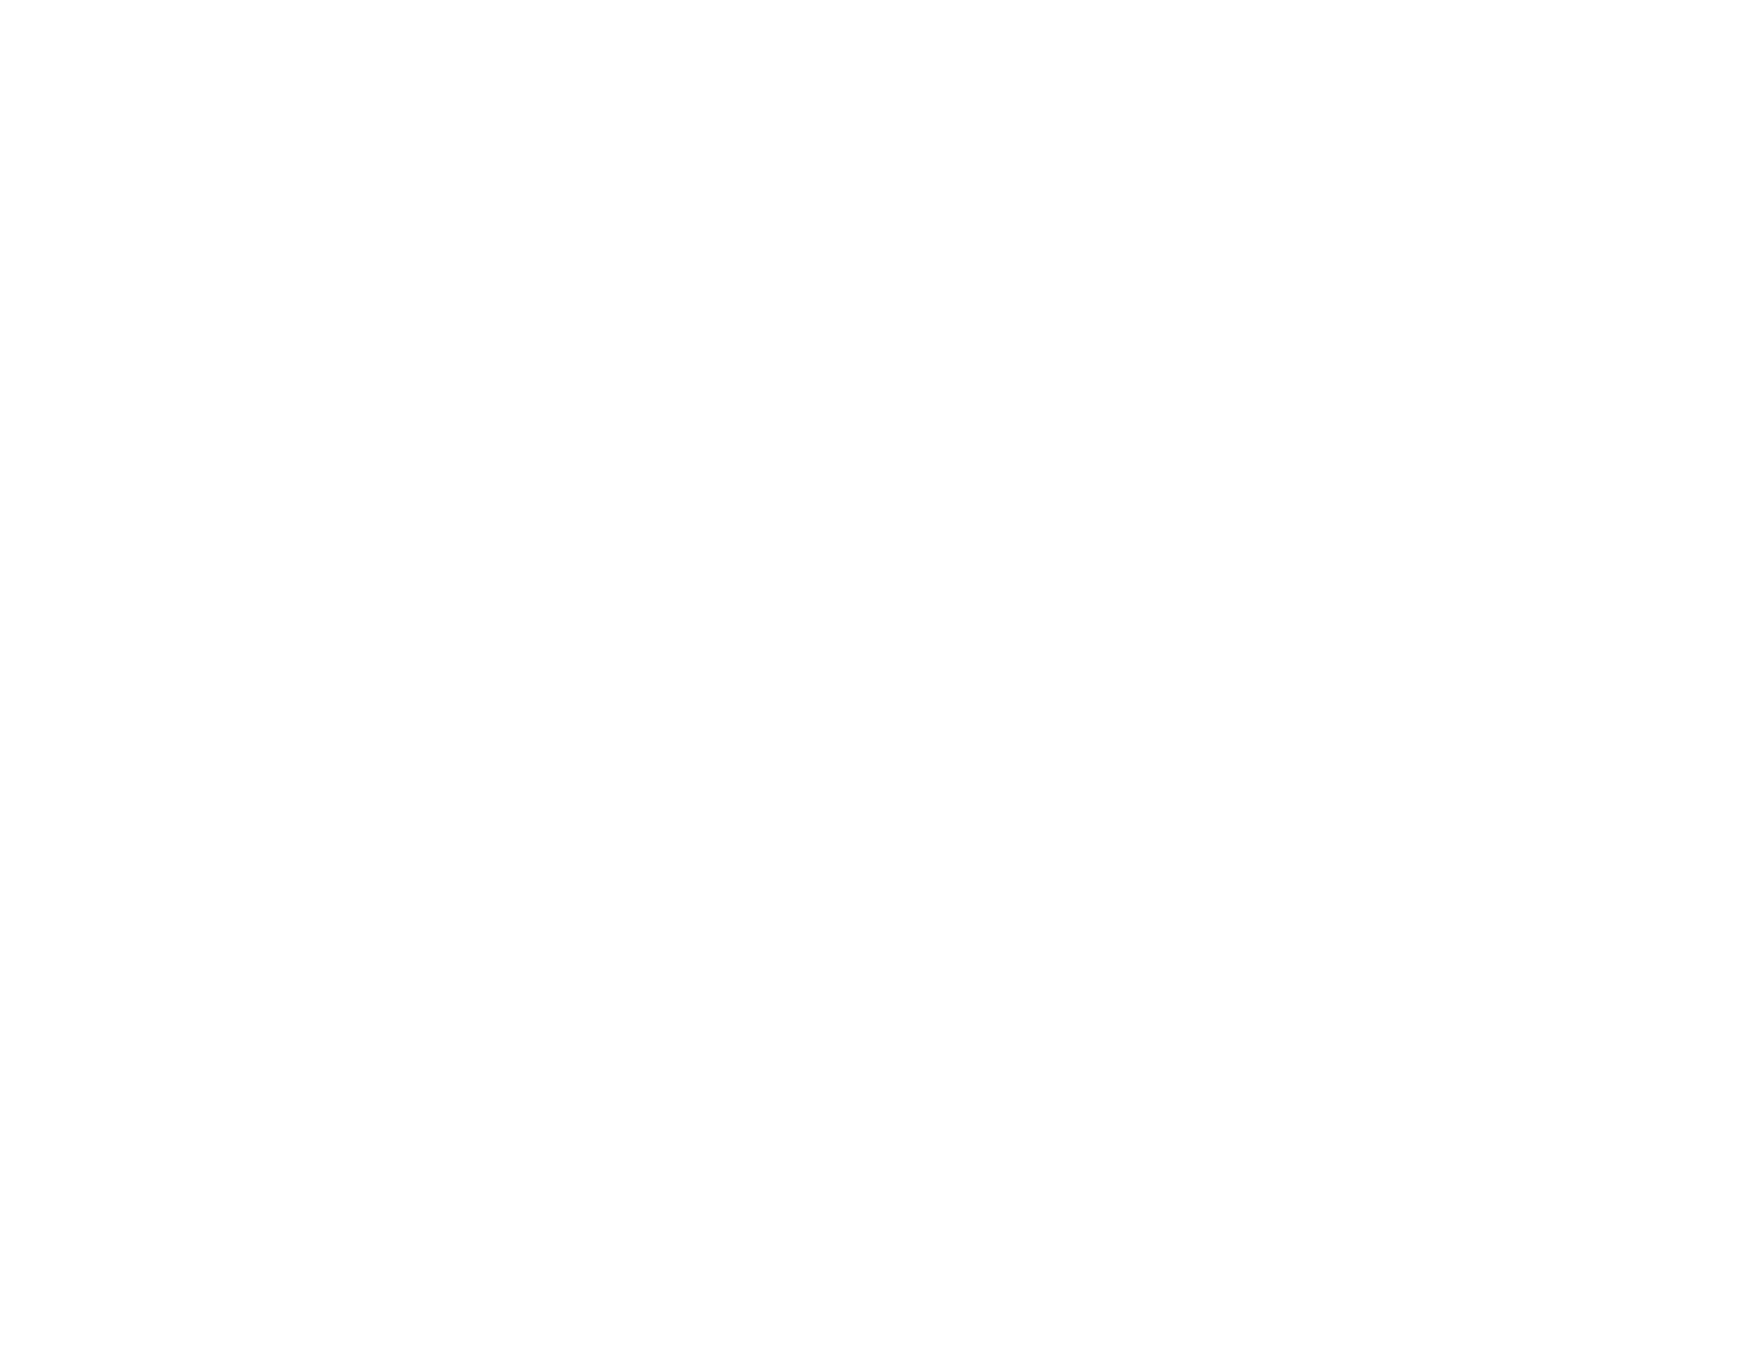 ECCF Logo in White Overlay